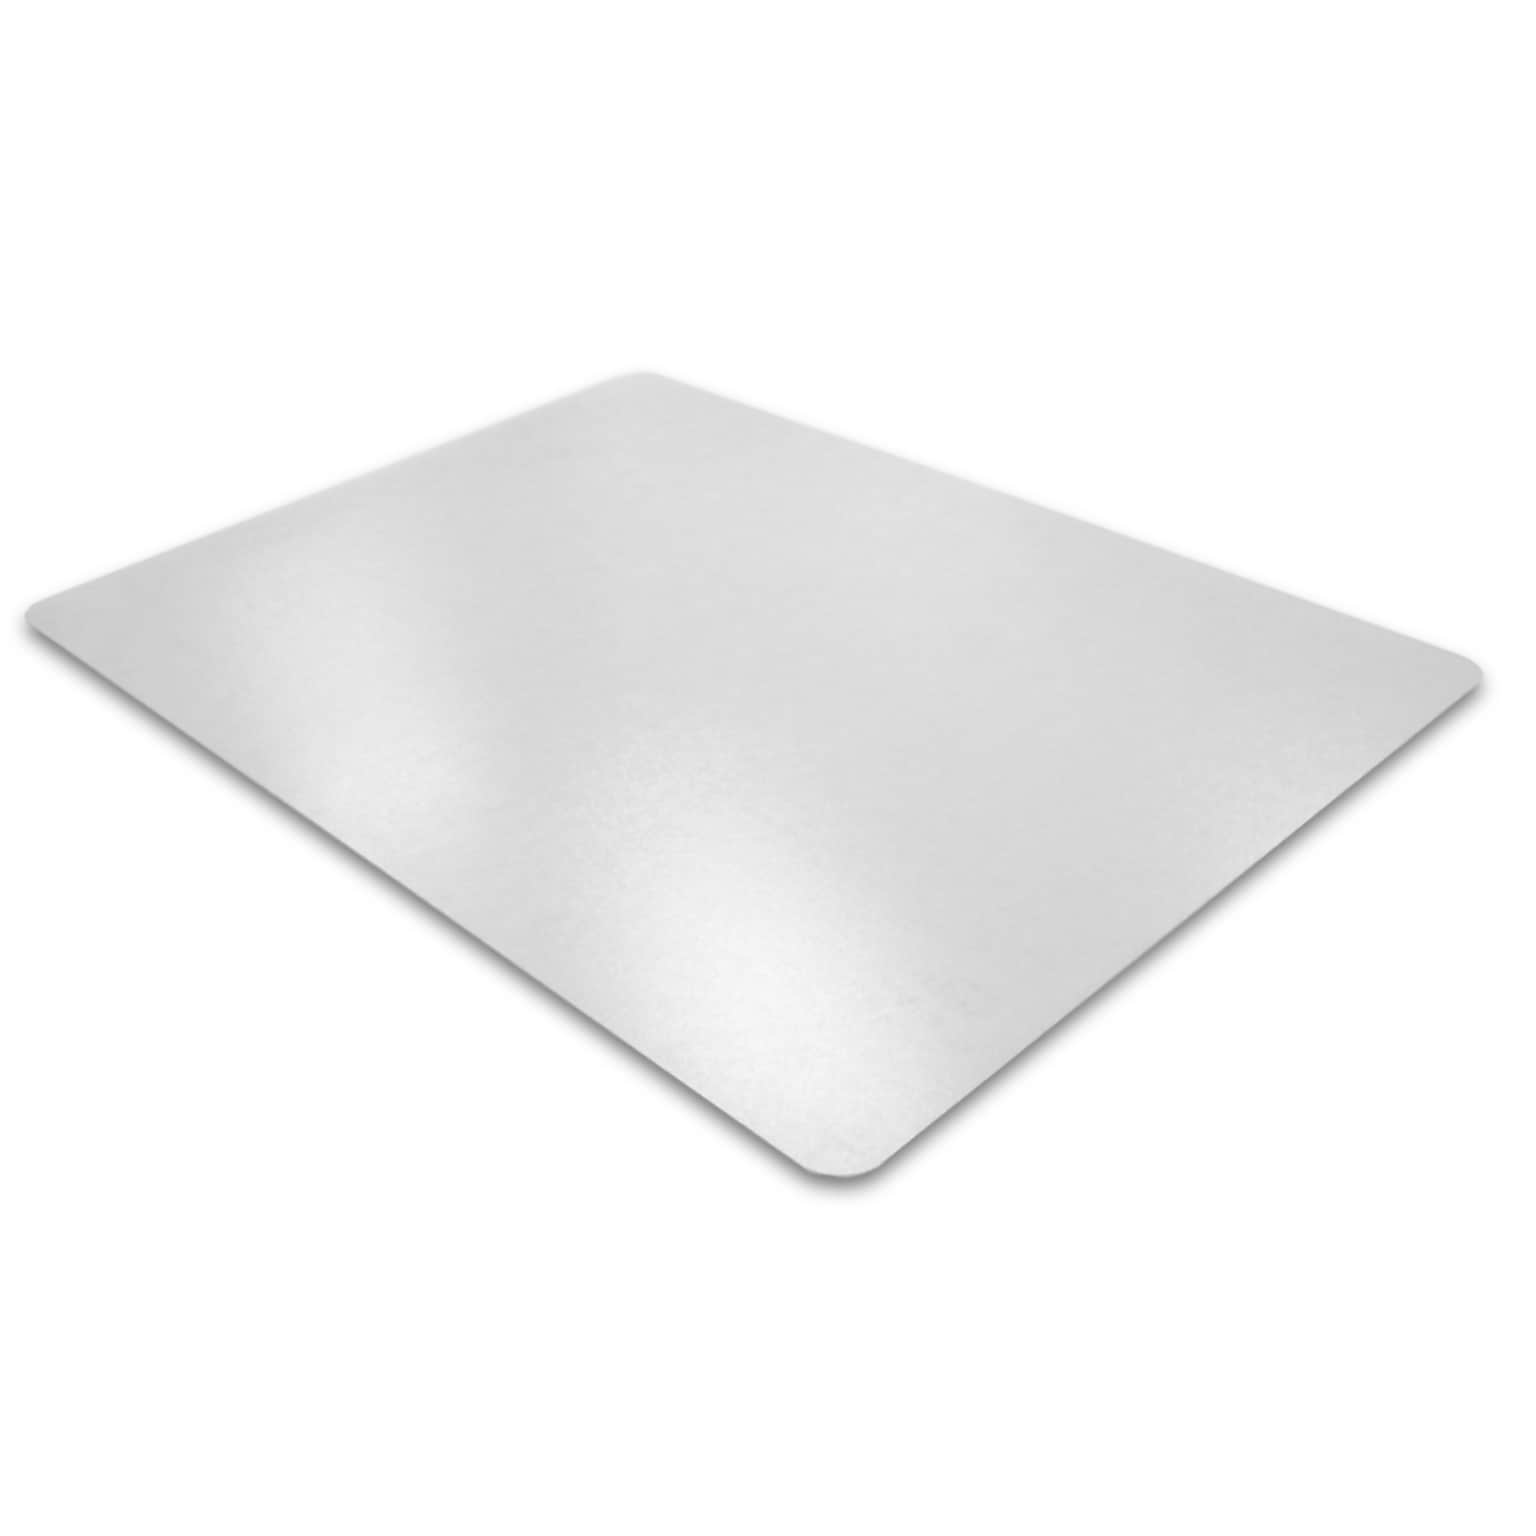 Floortex Homemat Multi-Purpose Floor Protector, 36 x 48, Clear (NRCMFLVS0026)